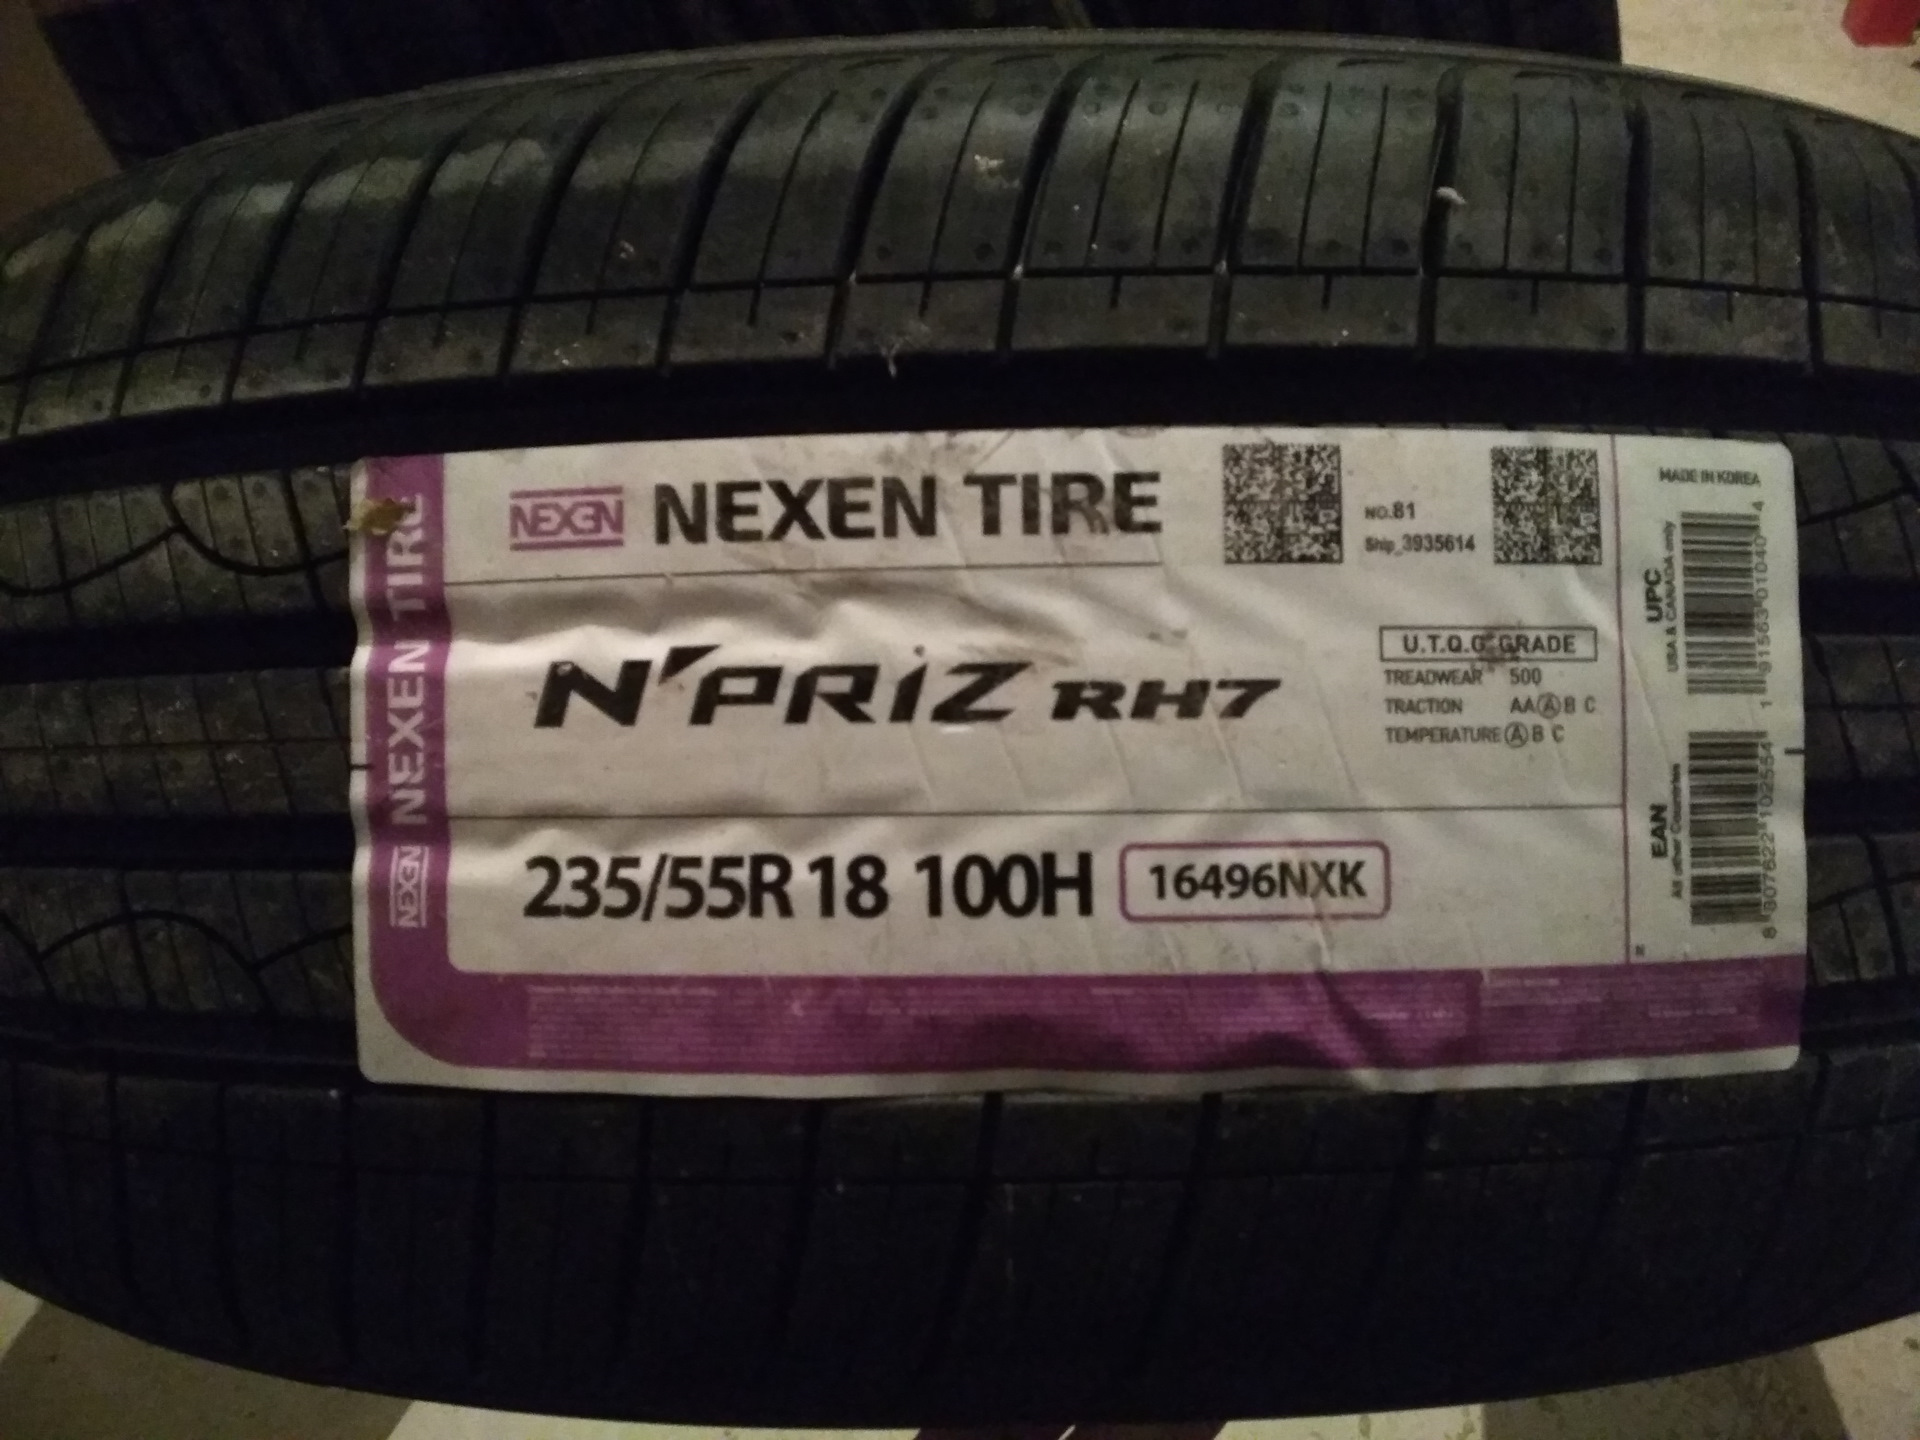 Nexen шины страна производитель для россии. 225/55r18 Nexen n'Priz rh7 БК 98 H. Nexen шины Страна производитель. 235/60*18 103h Nexen n Priz rh7 (шт). Nexen n'Priz rh1 215/70r16 100h 14394 шт.